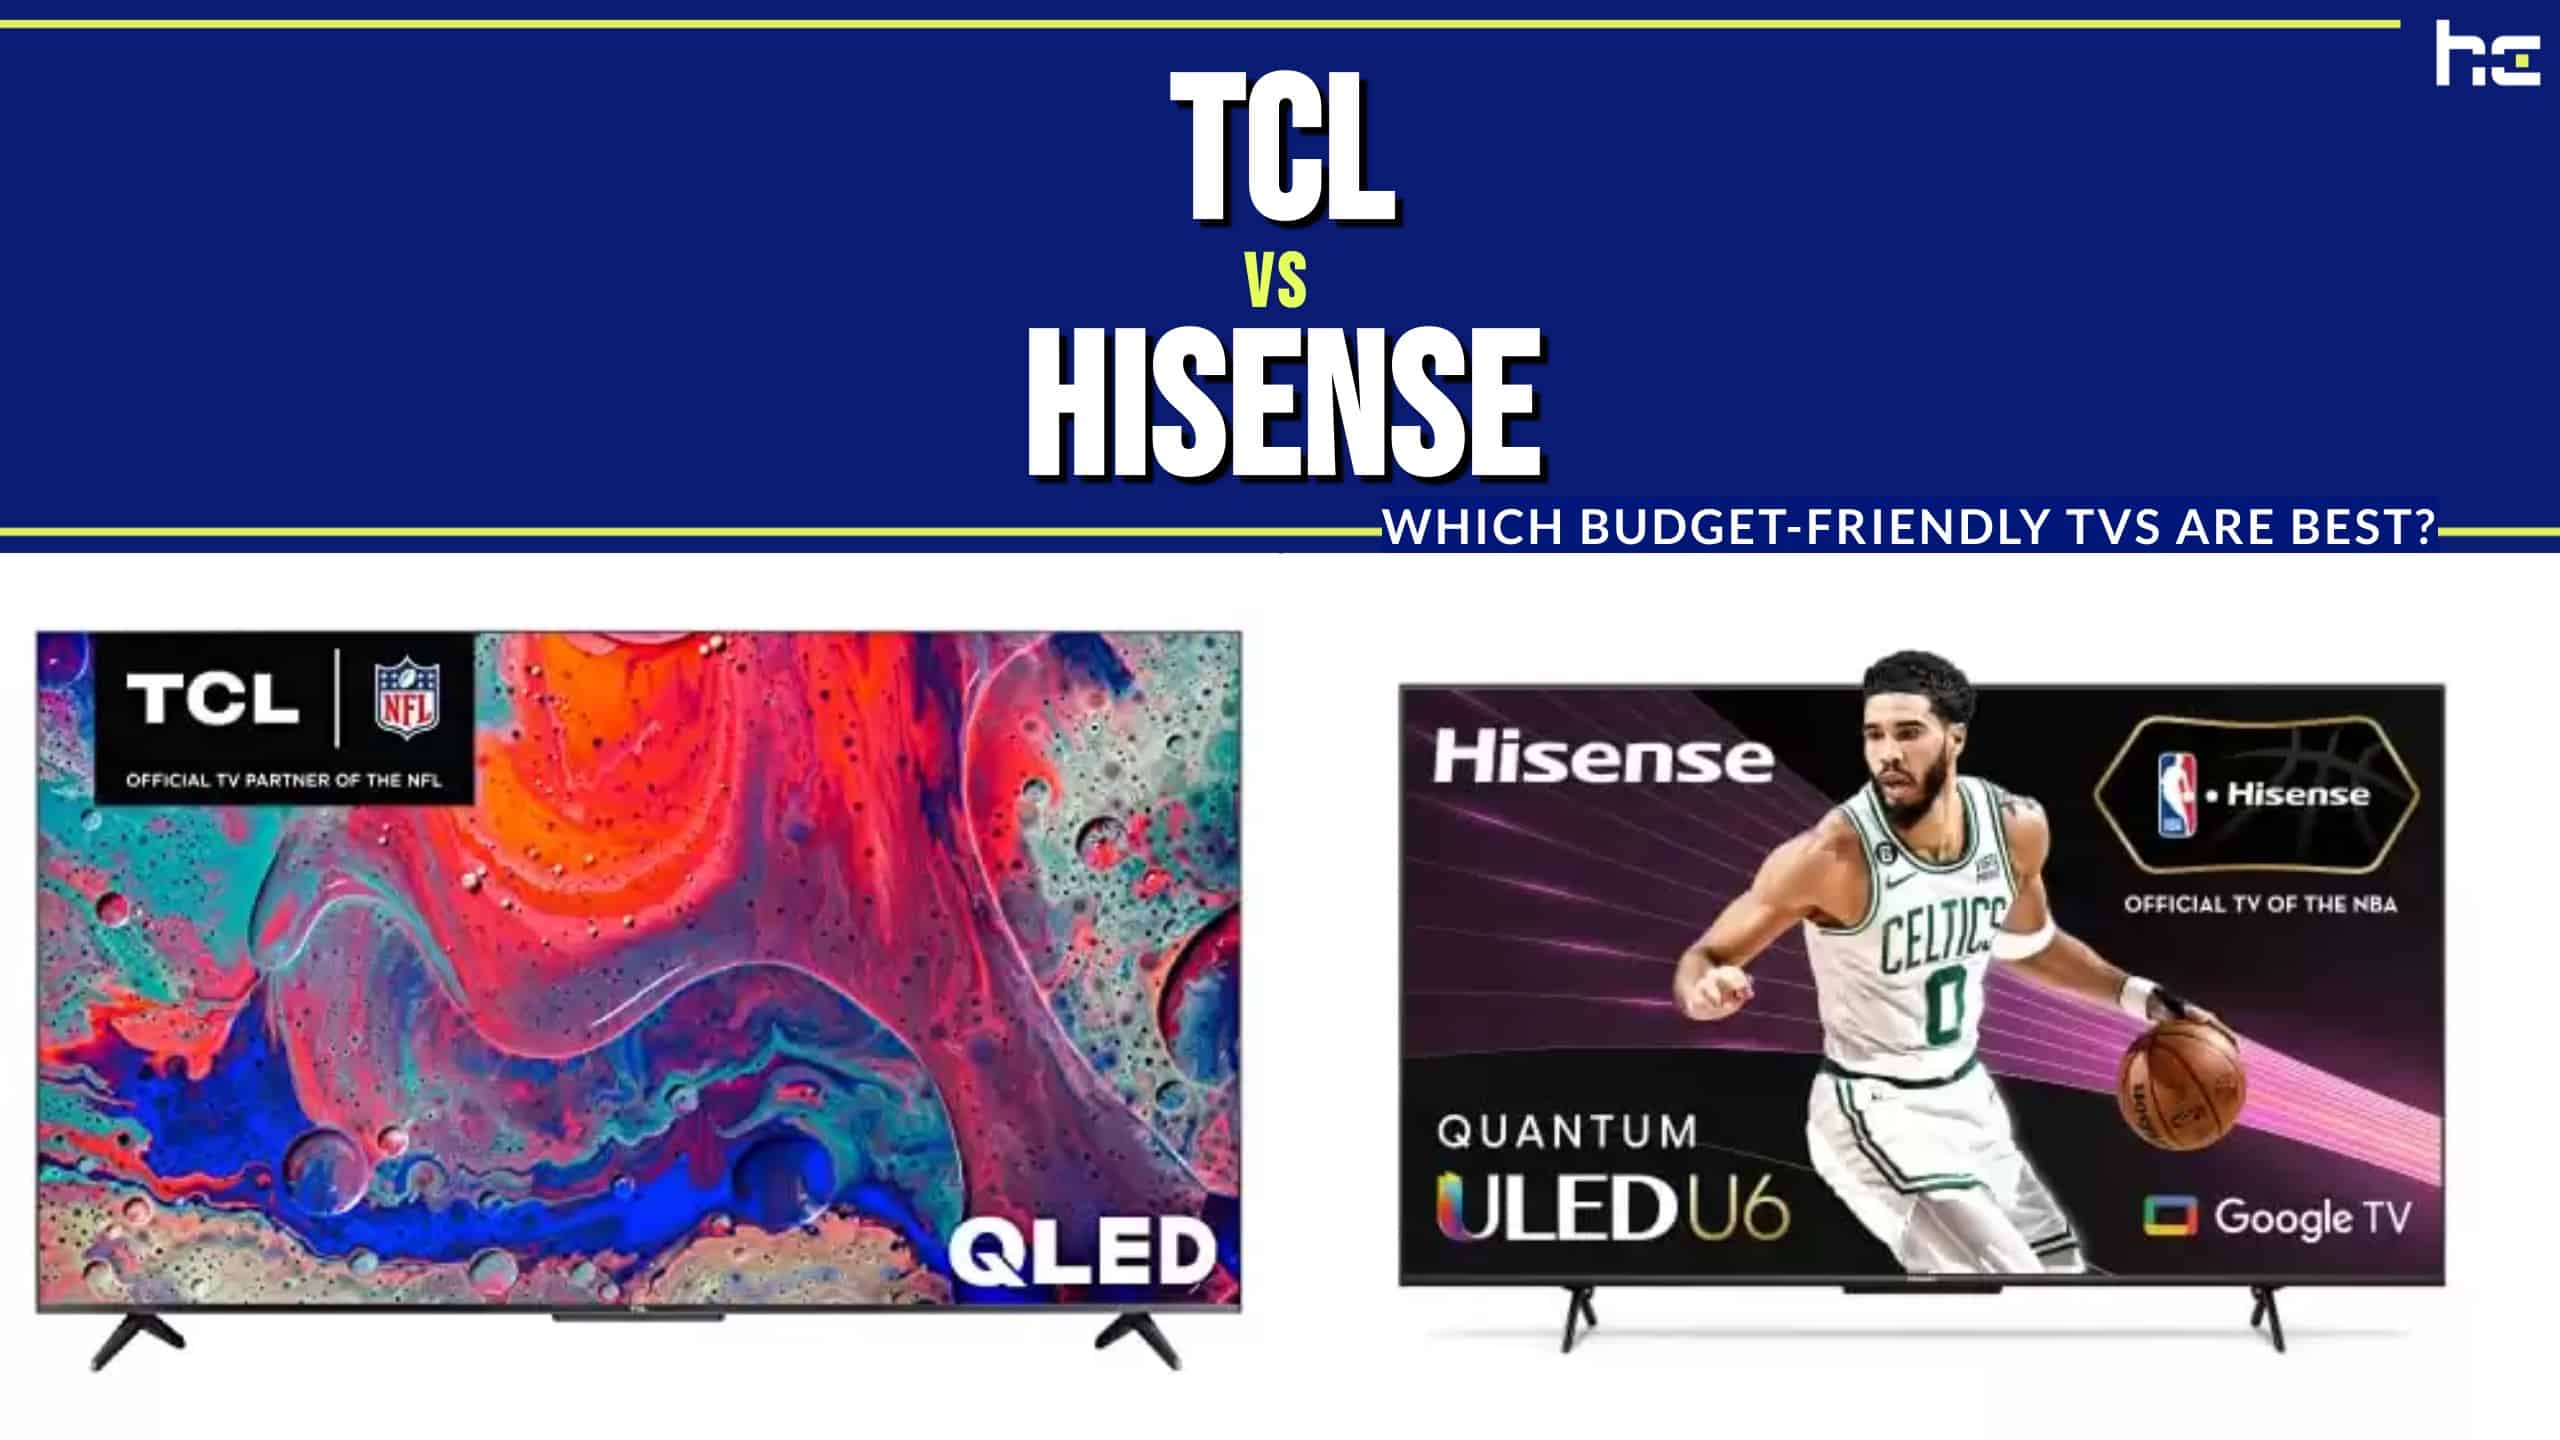 TCL vs Hisense featured image